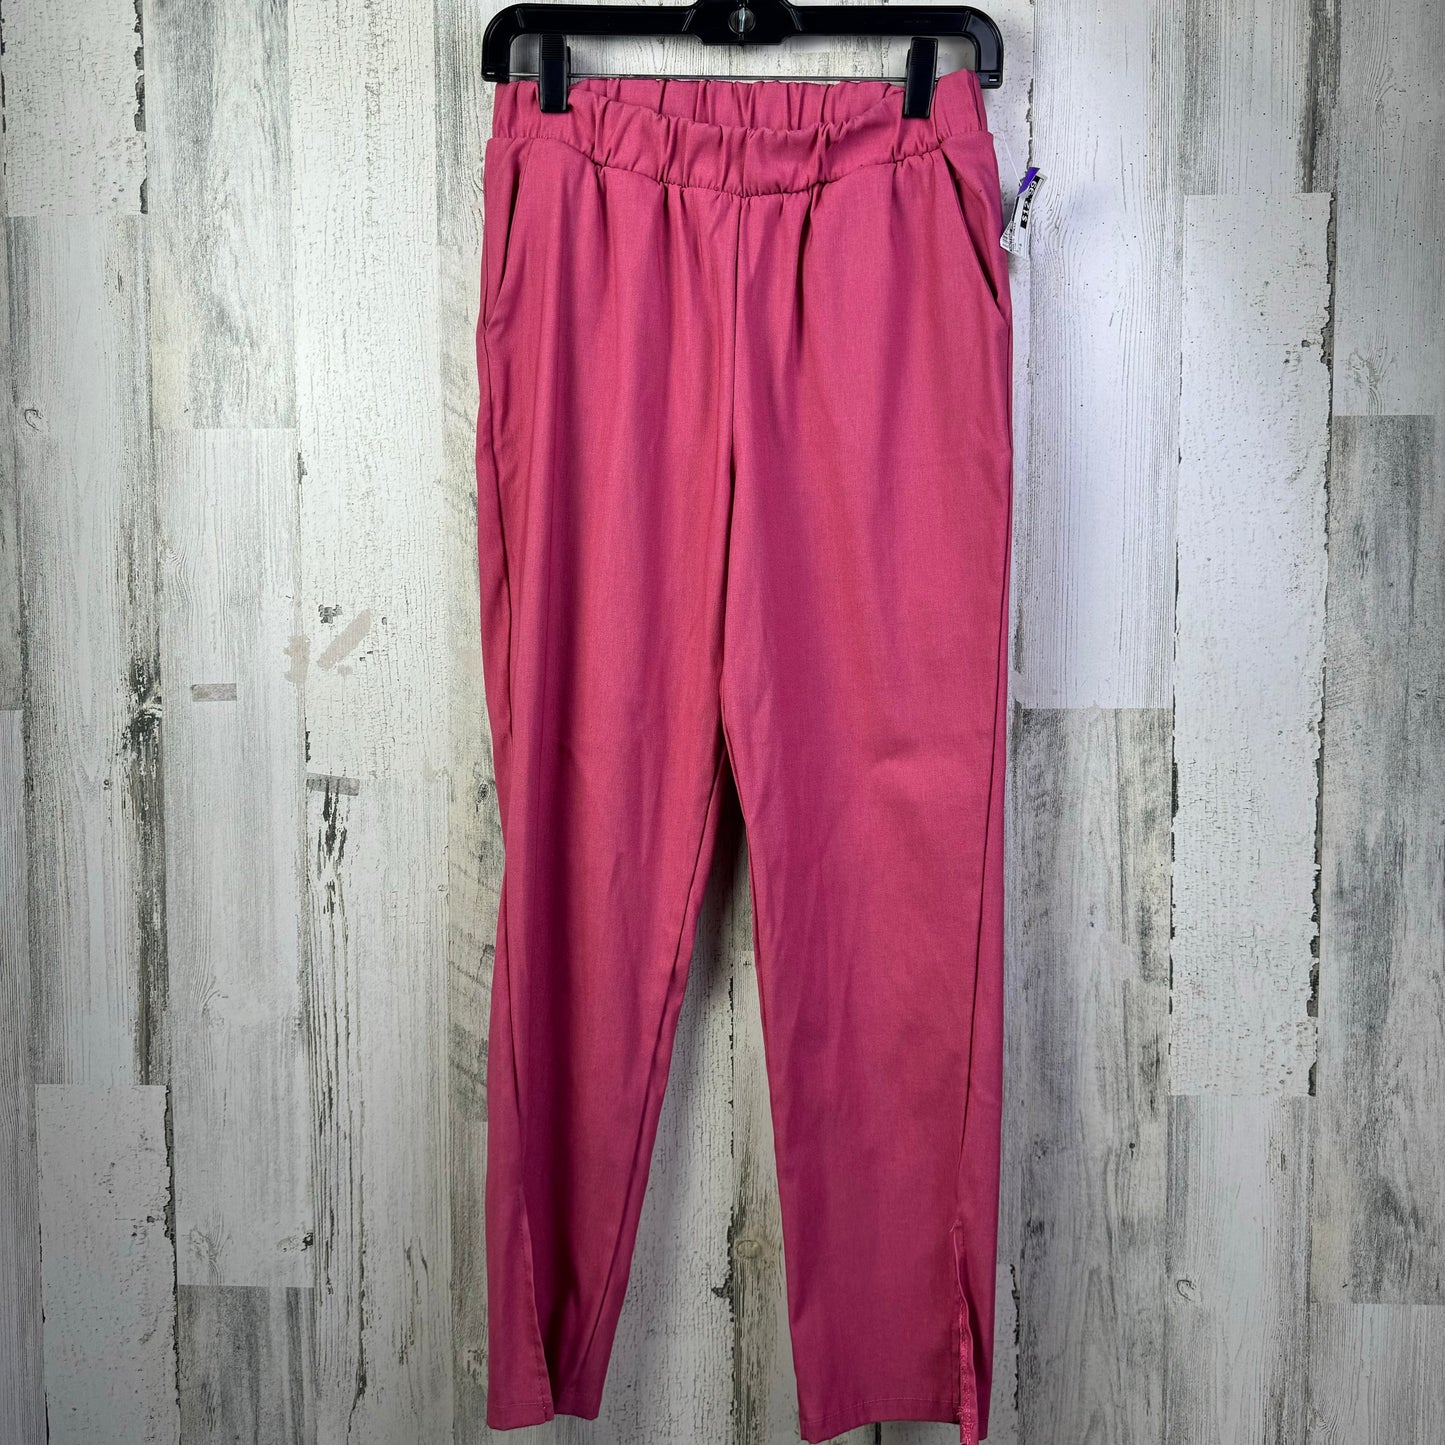 Pink Pants Dress Acting Pro, Size 8